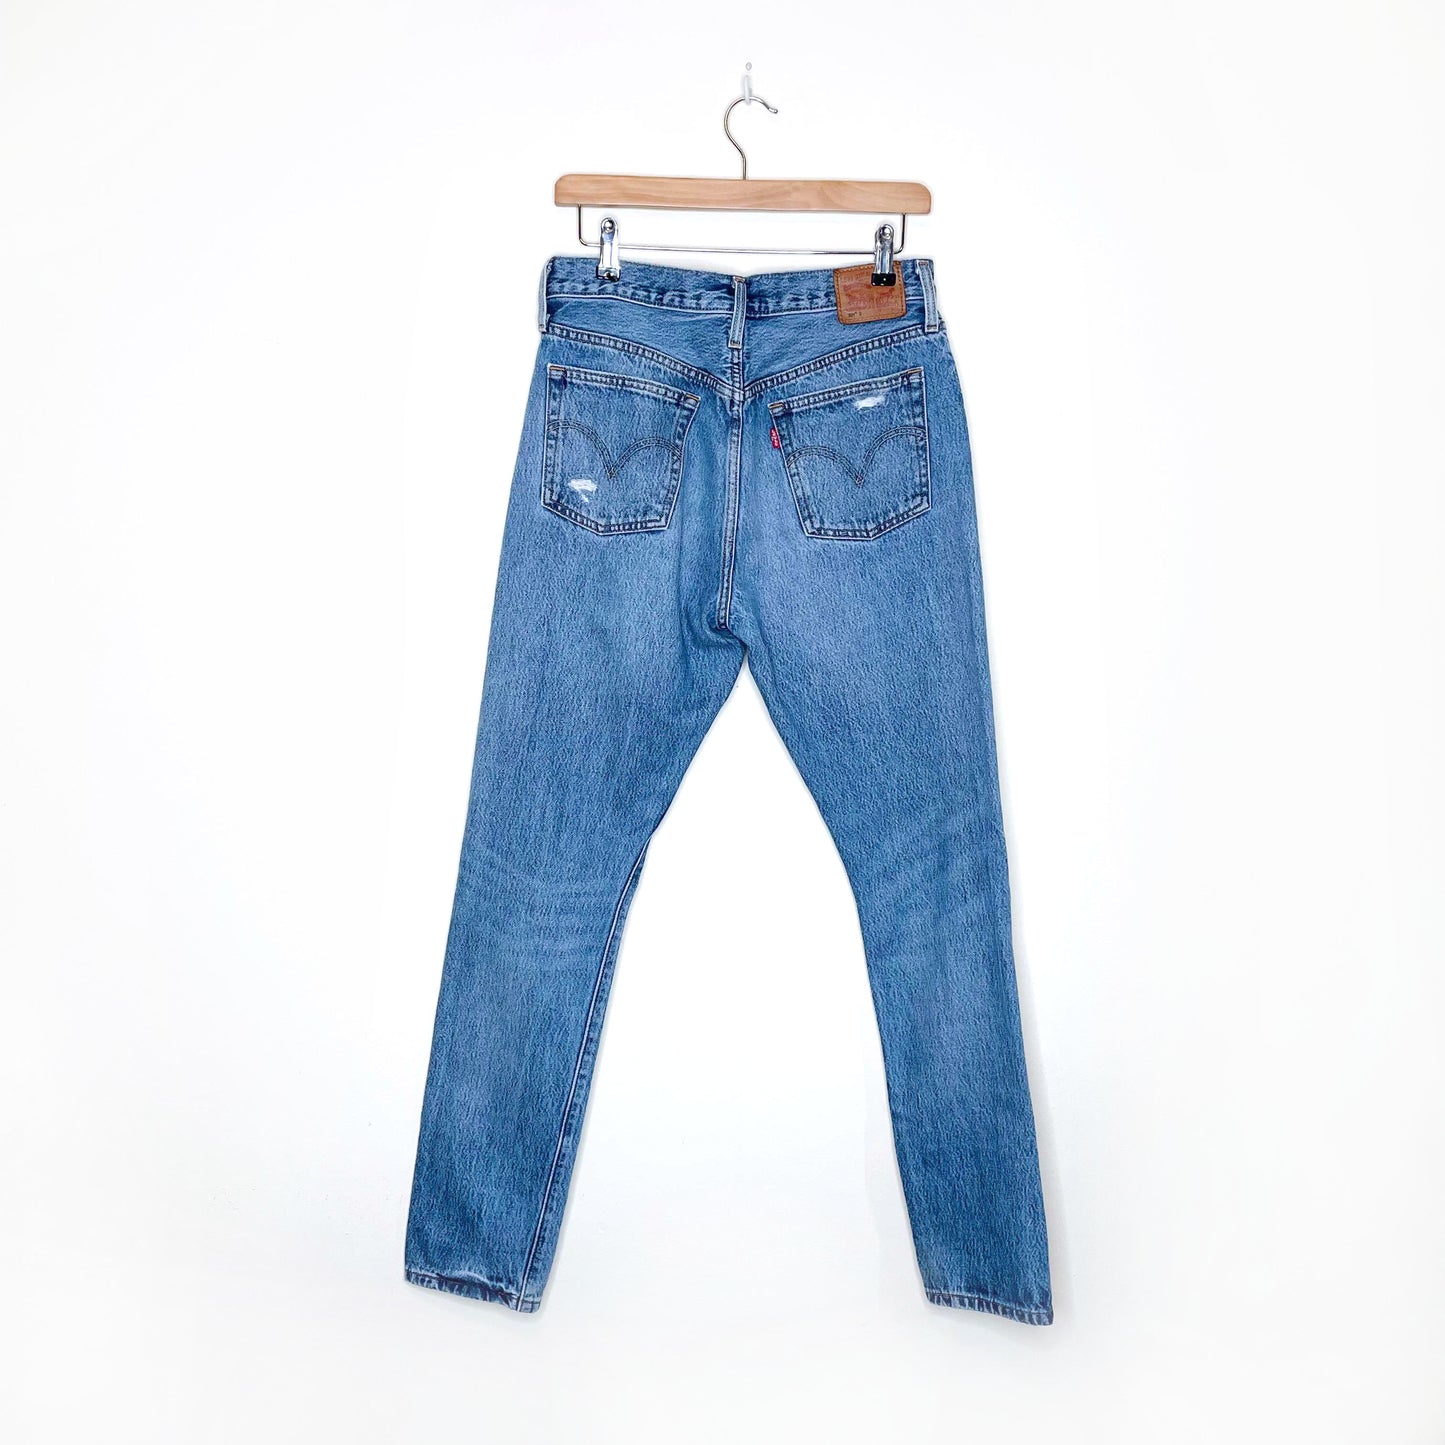 levi's 501 medium wash ripped knees original fit jeans - size 29